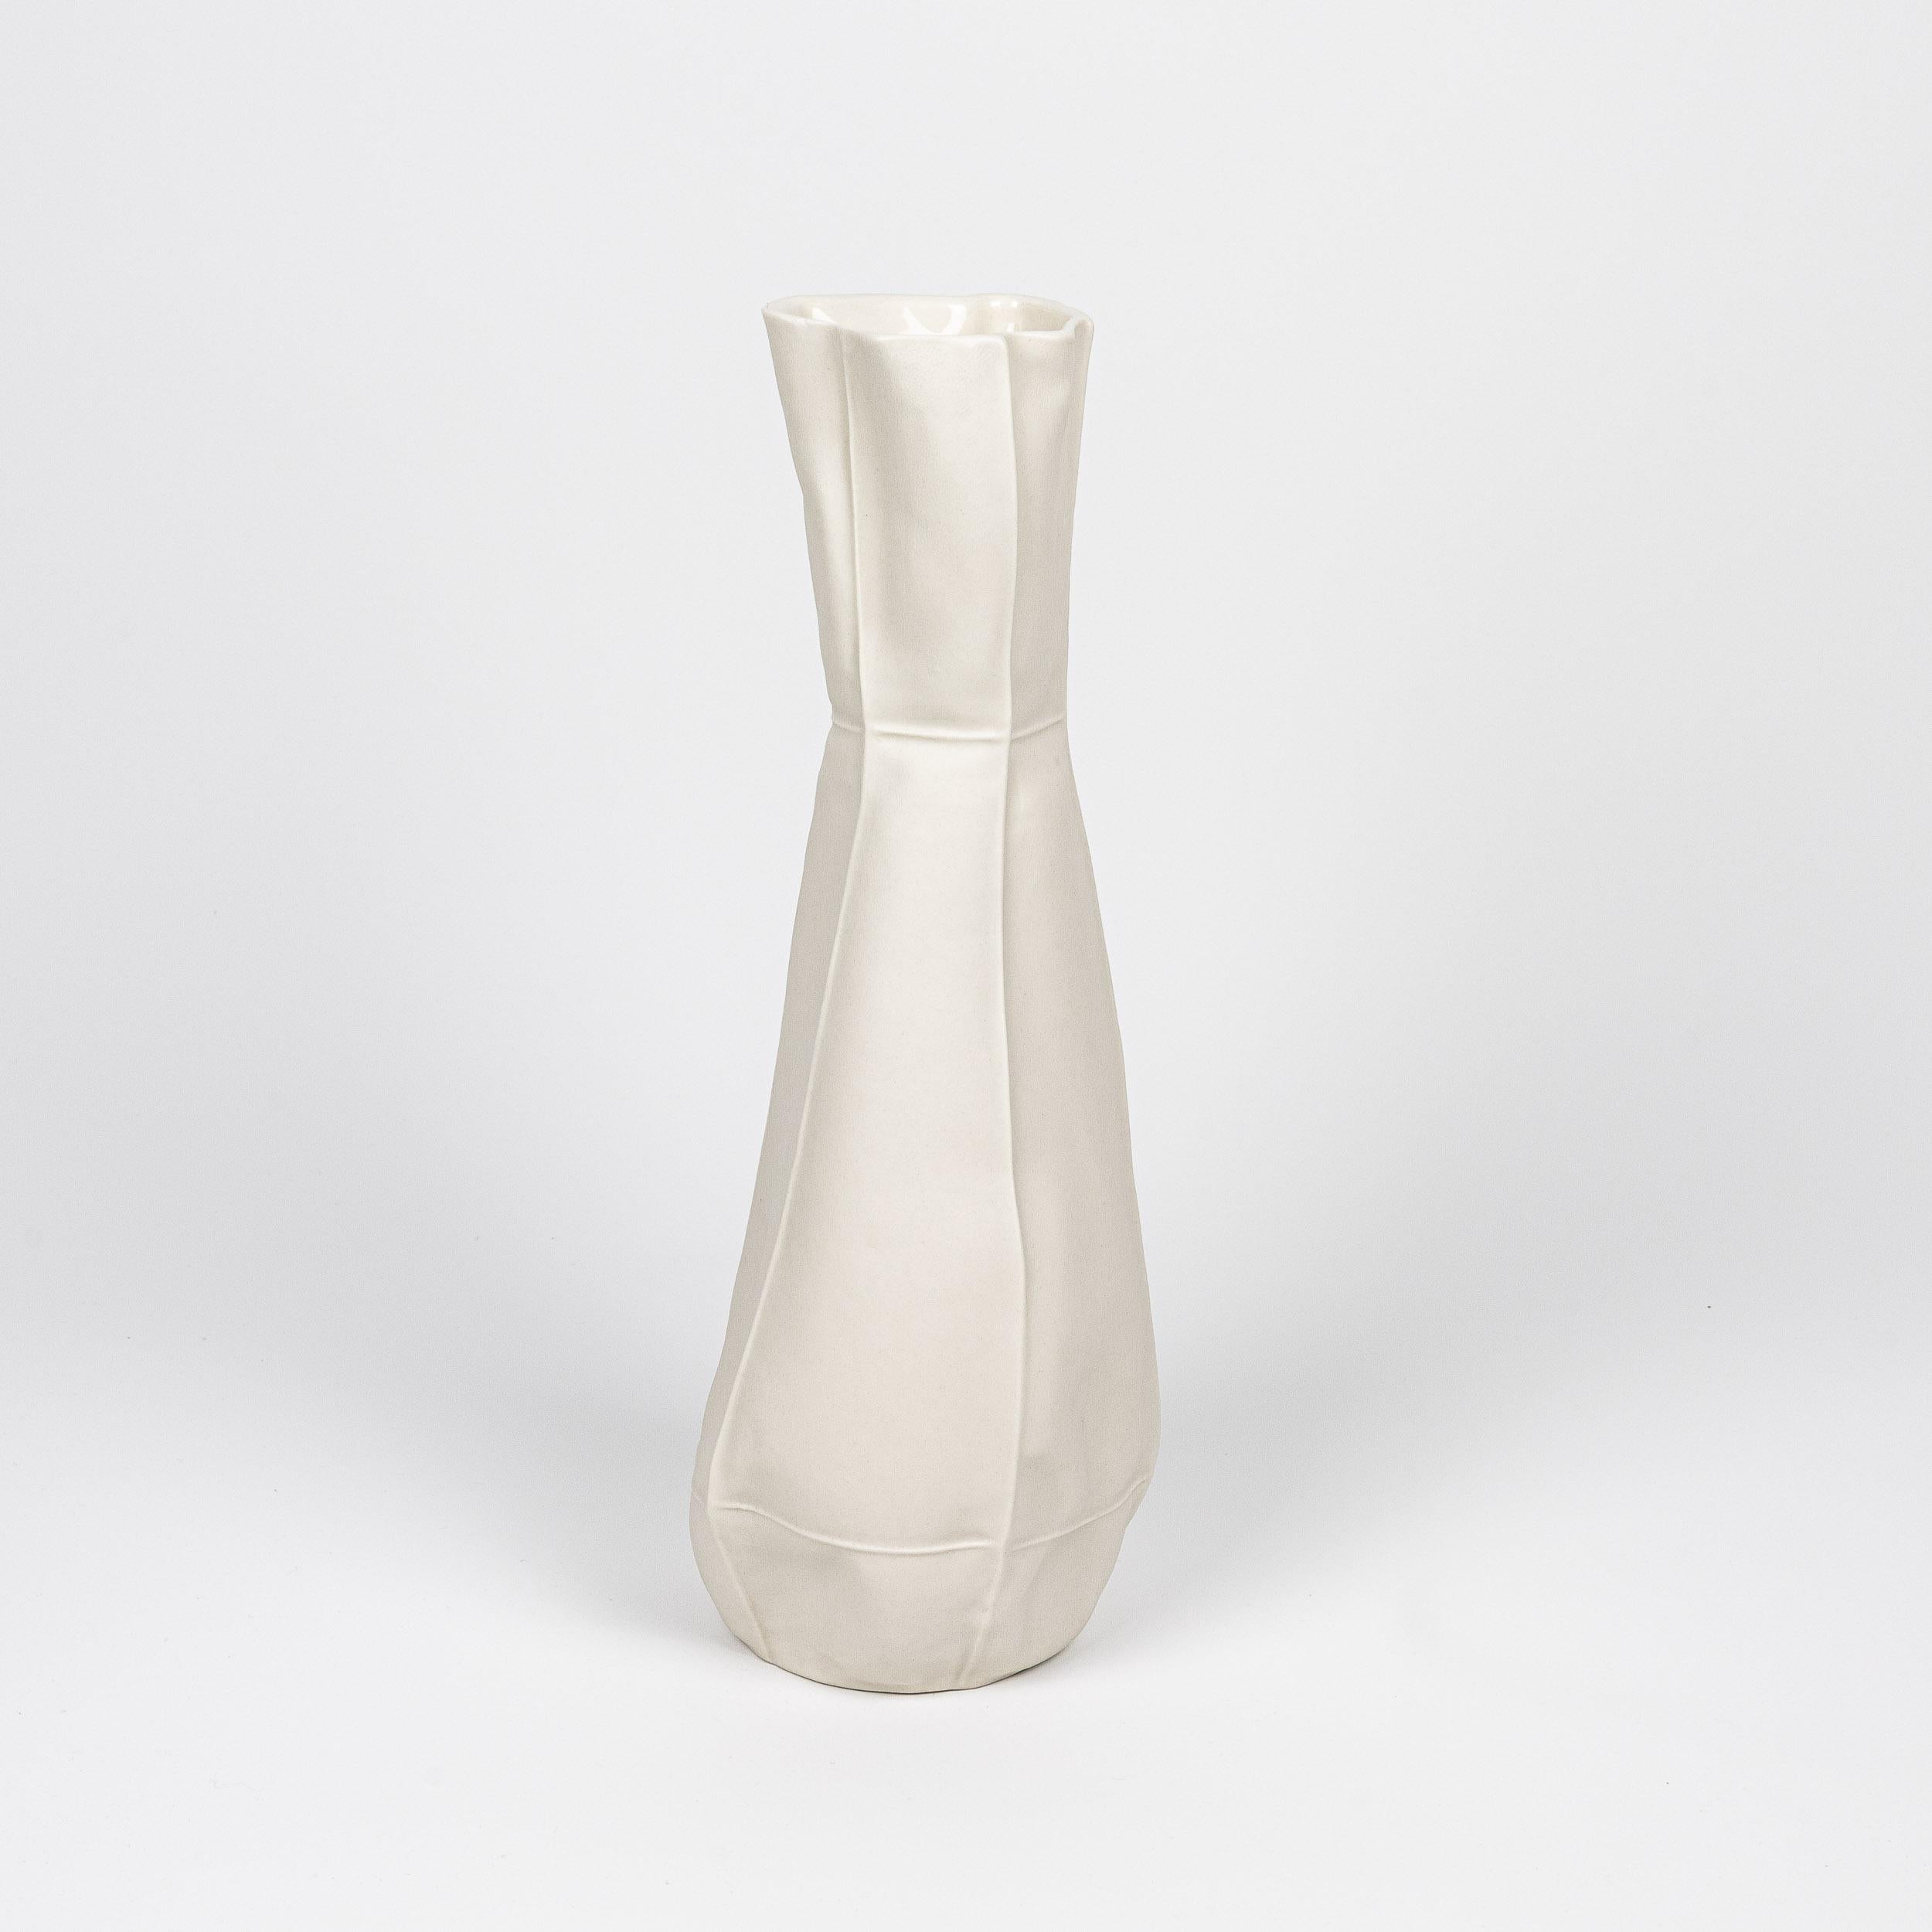 American White Ceramic Kawa Vase #13, Organic Porcelain Flower Vase, Leather-cast For Sale